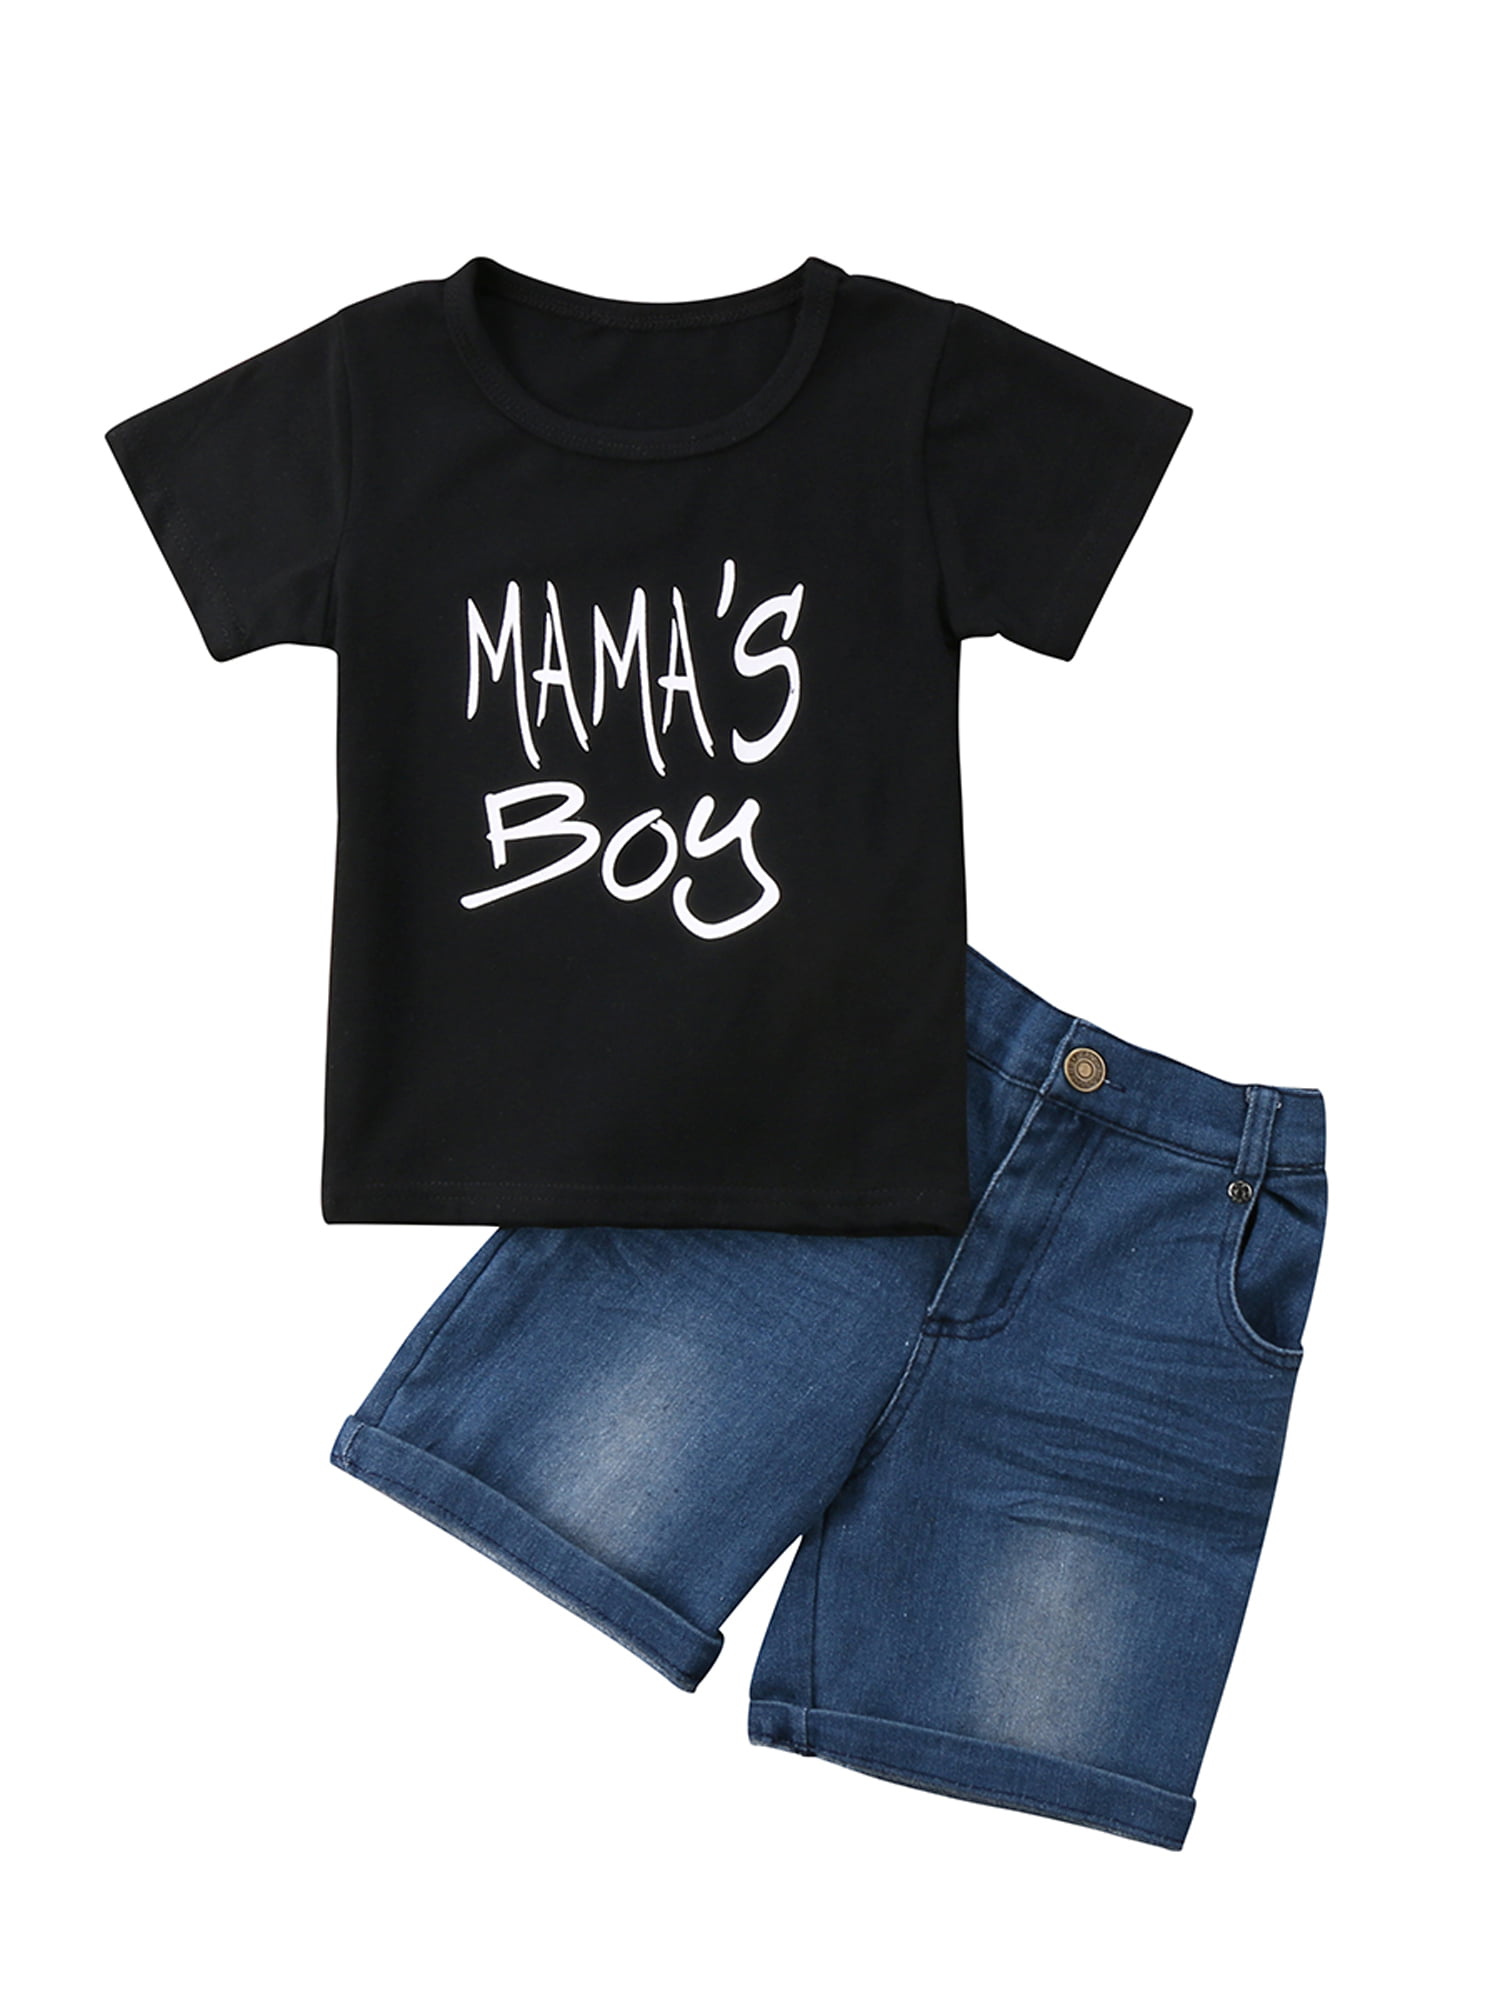 Toddler Kids Boy Summer Clothes T-shirt Tops+Denim Shorts Pants Outfits 2pcs Set 